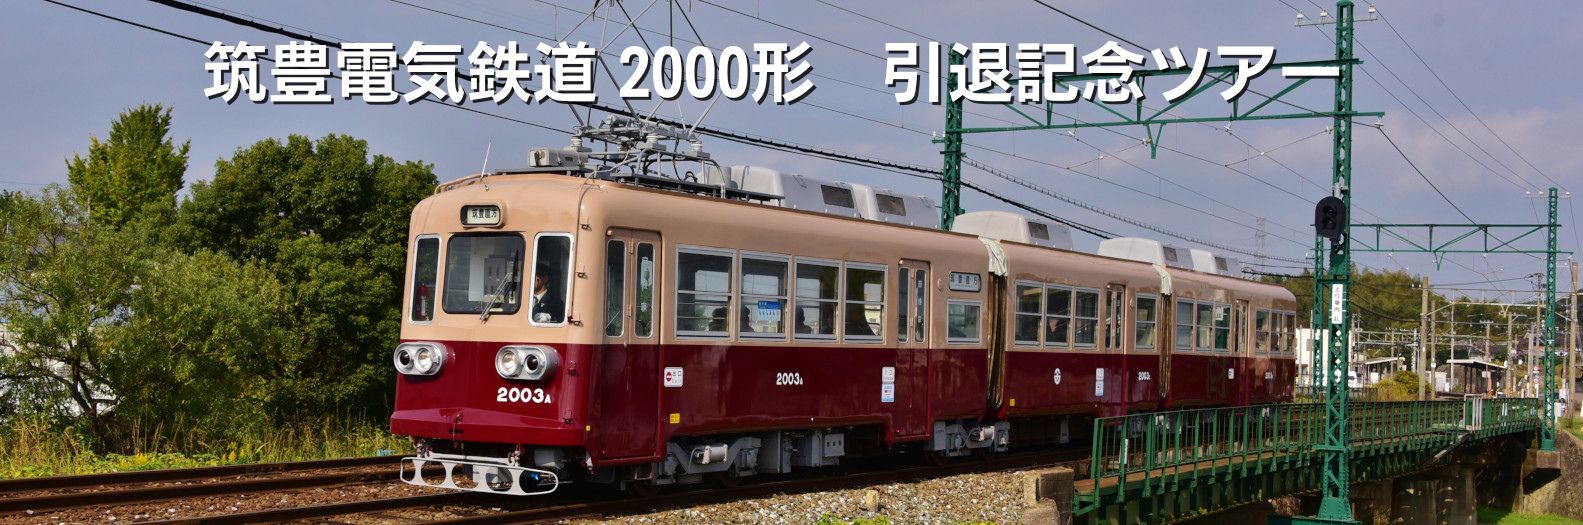 筑豊電気鉄道2000形 引退記念ツアー